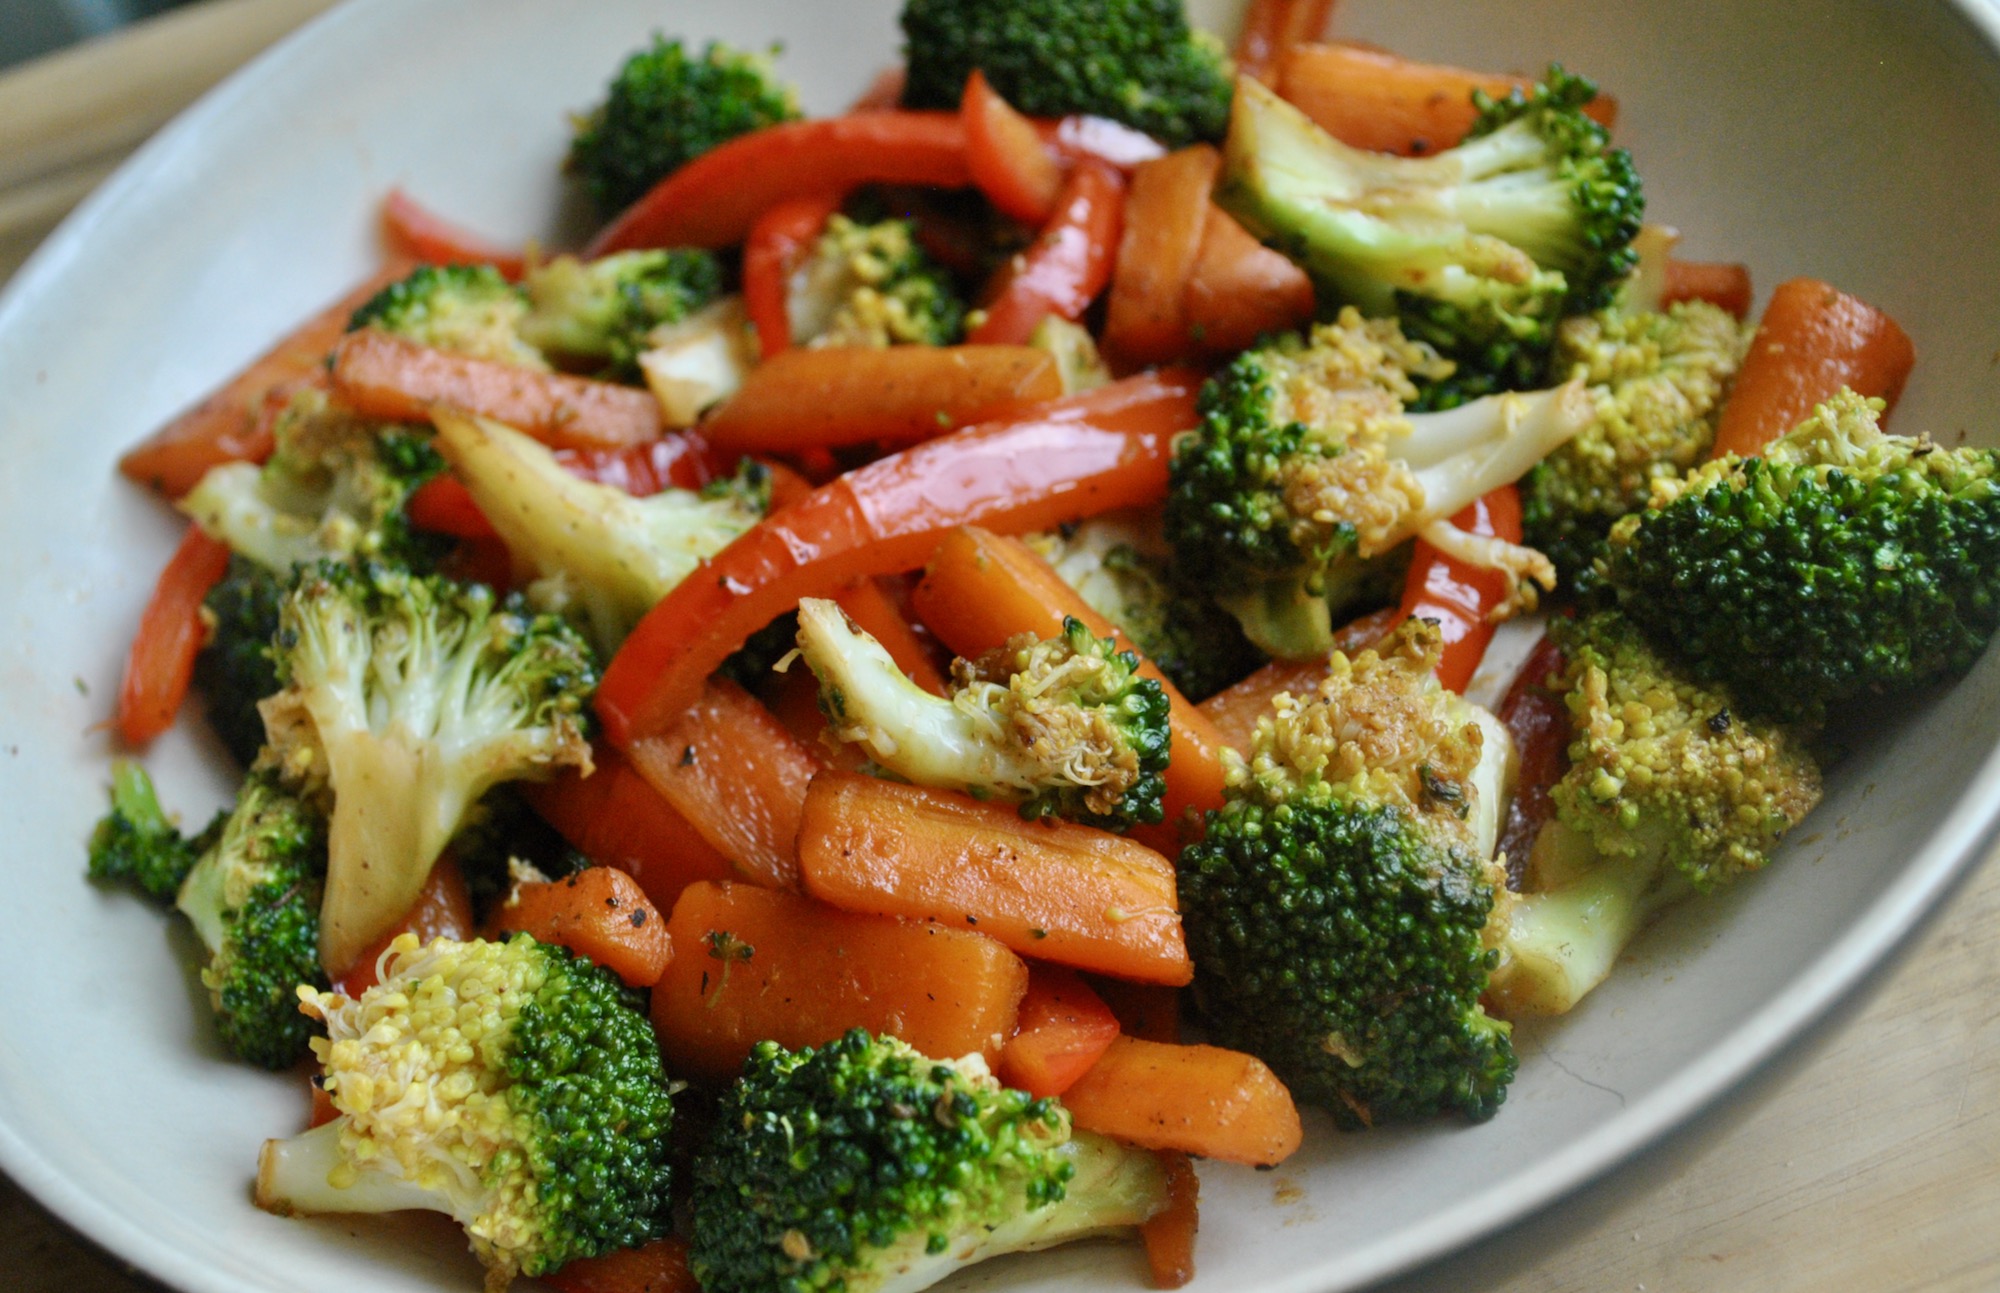 Broccoli and Carrot stir fry recipe - 1